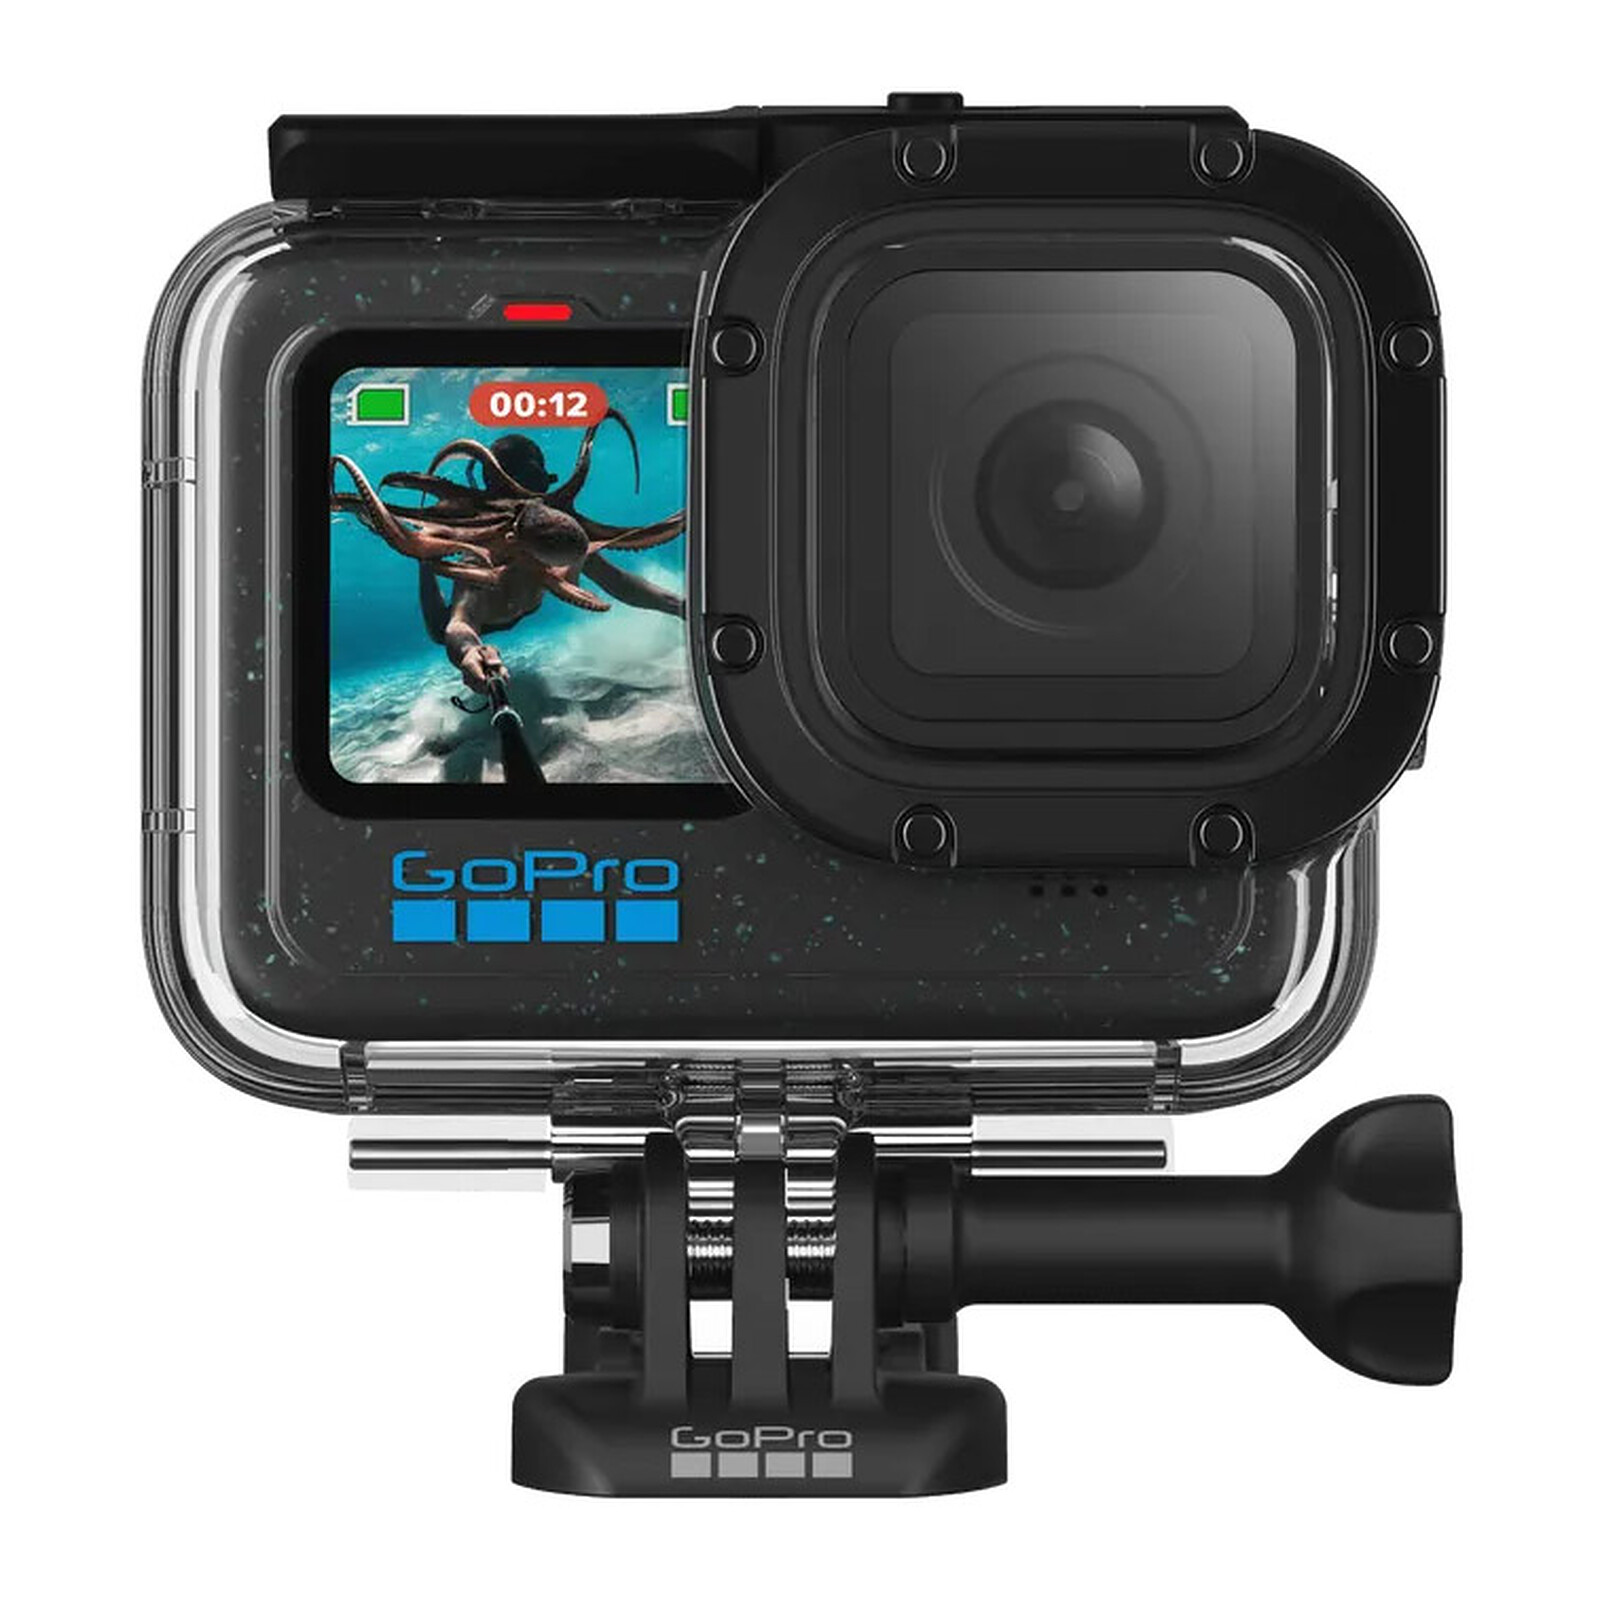 GoPro Kit de aventura de accesorios para cámara (todas las cámaras GoPro -  Accesorio oficial de GoPro